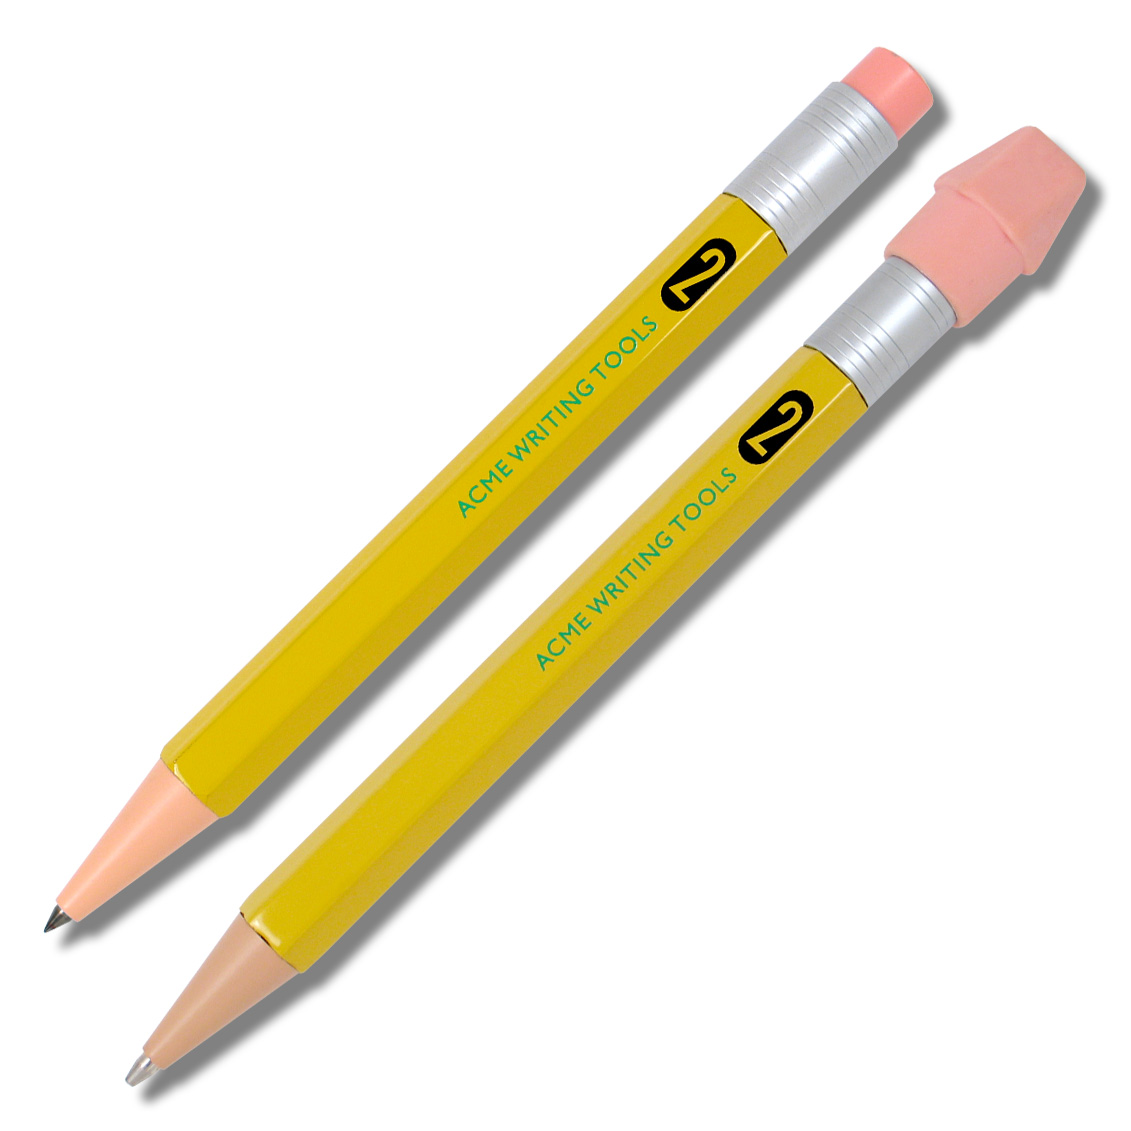 Shop NUMBER 2 Pen & Pencil Set by Adrian Olabuenaga (#PACME2SET